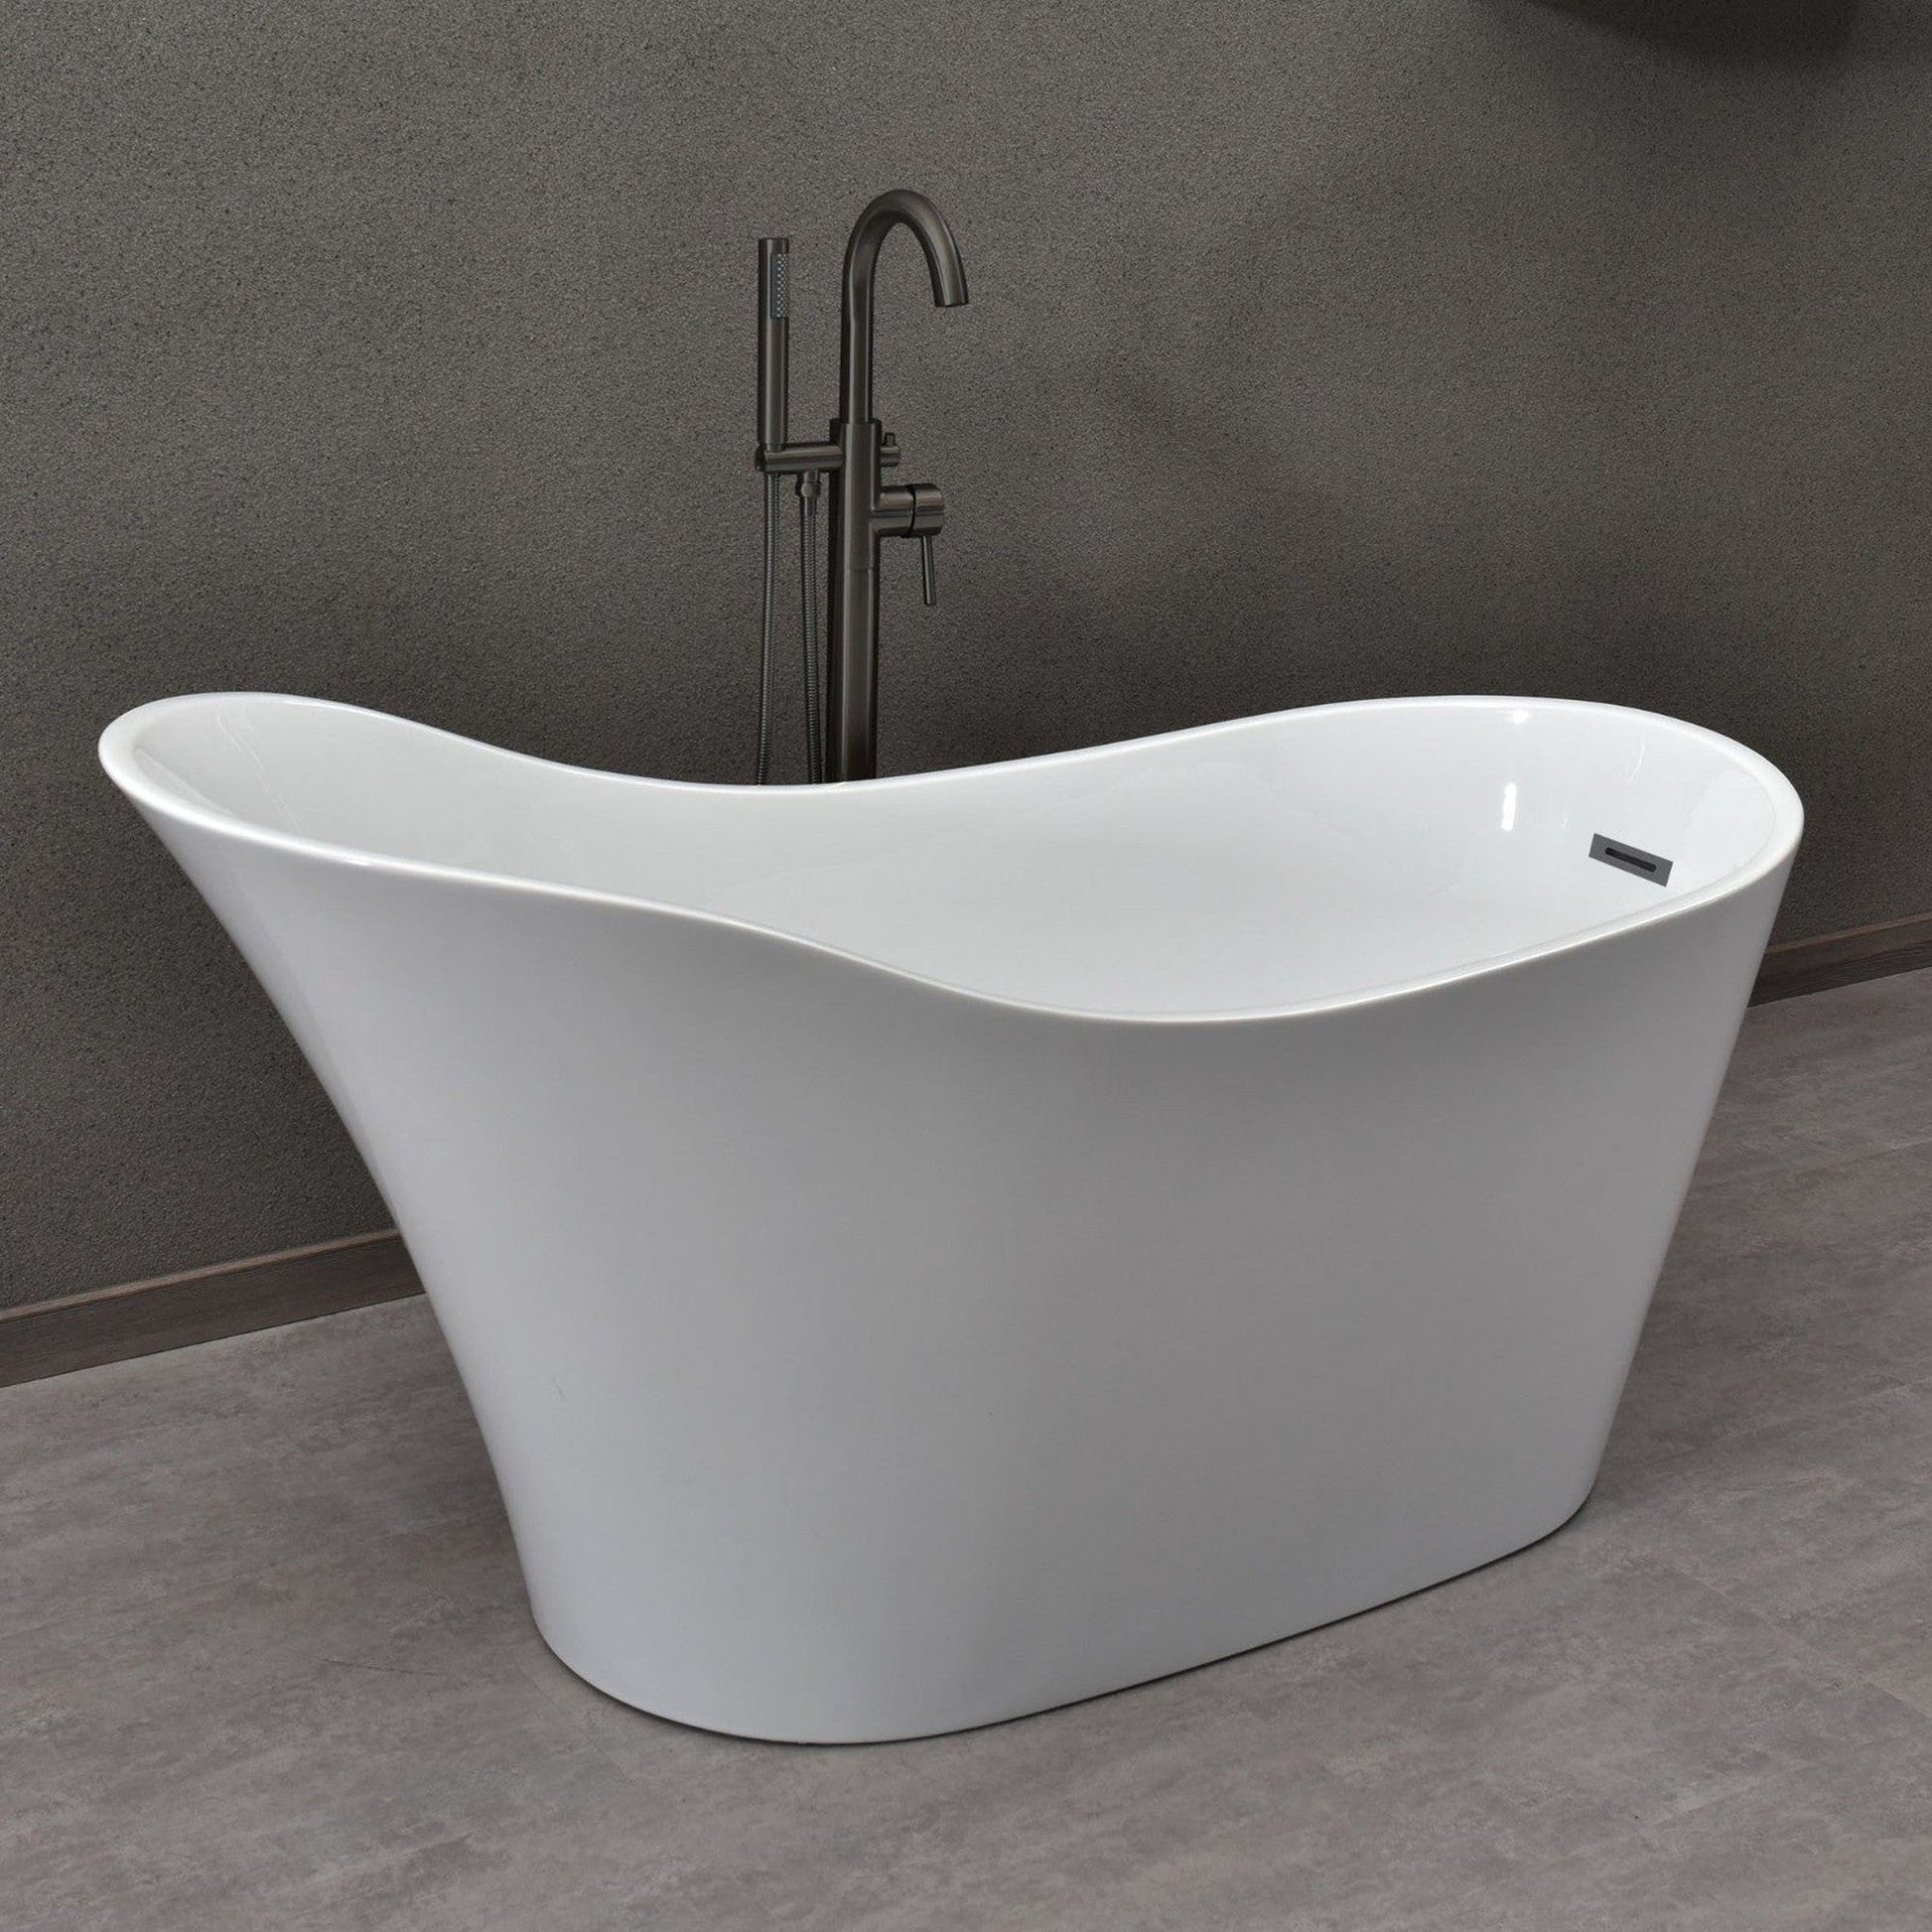 WoodBridge B0029 59" White Acrylic Freestanding Soaking Bathtub With Matte Black Drain, Overflow, F0072MBVT Tub Filler and Caddy Tray